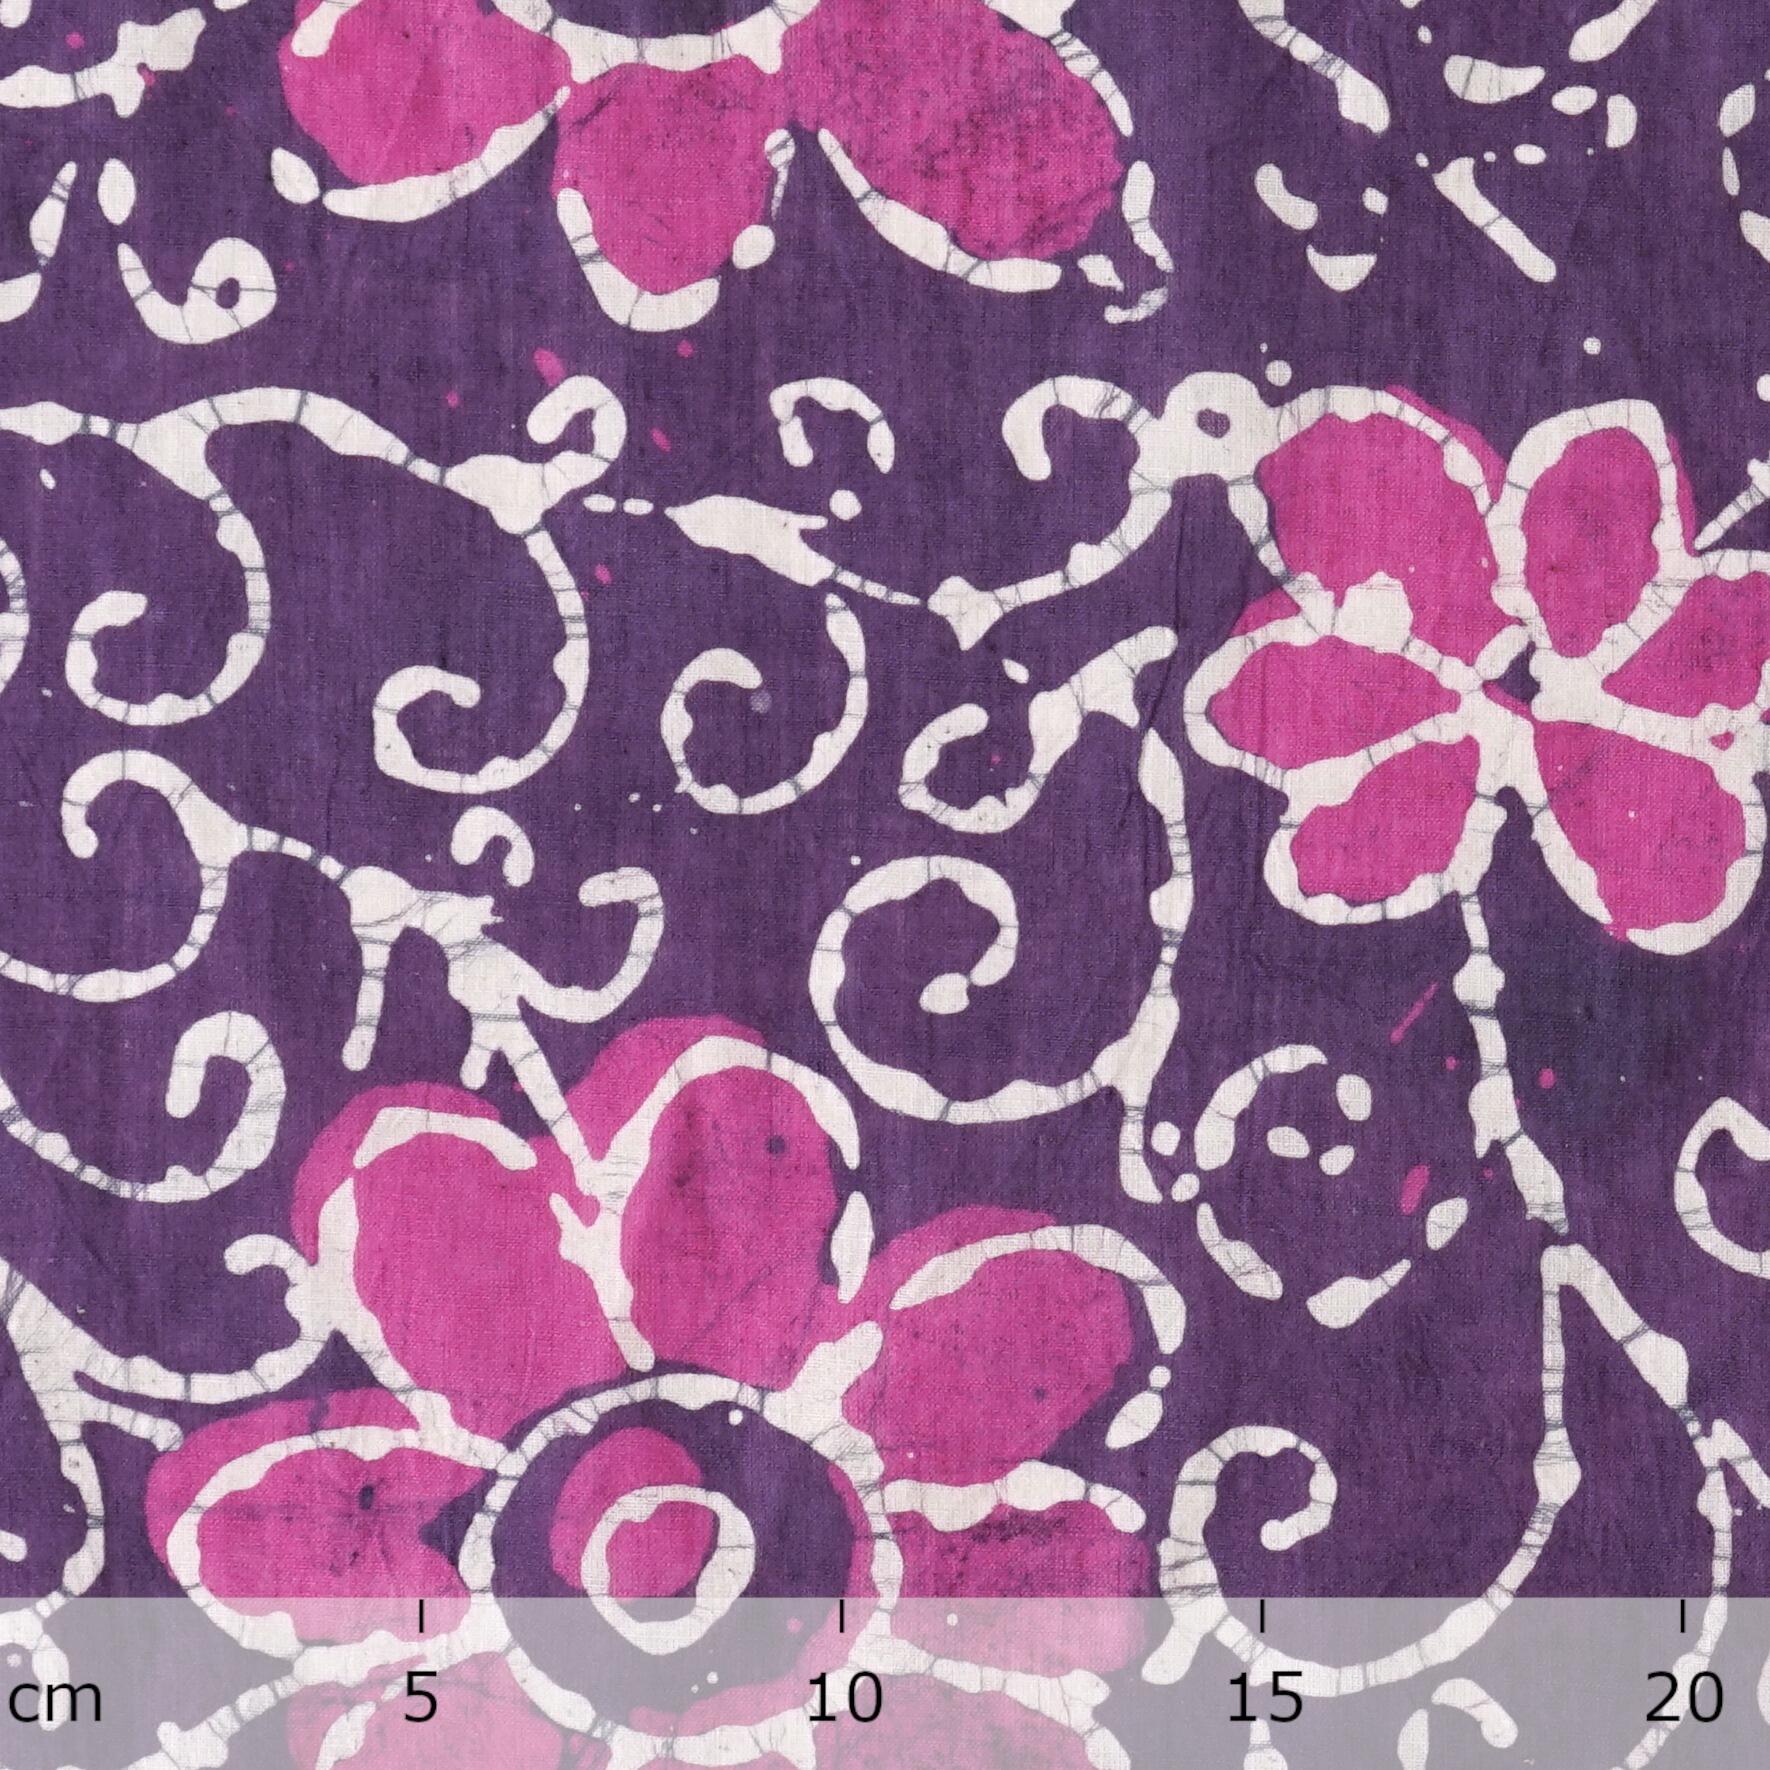 100% Block-Printed Batik Cotton Fabric From India - Flower Power Motif - Ruler